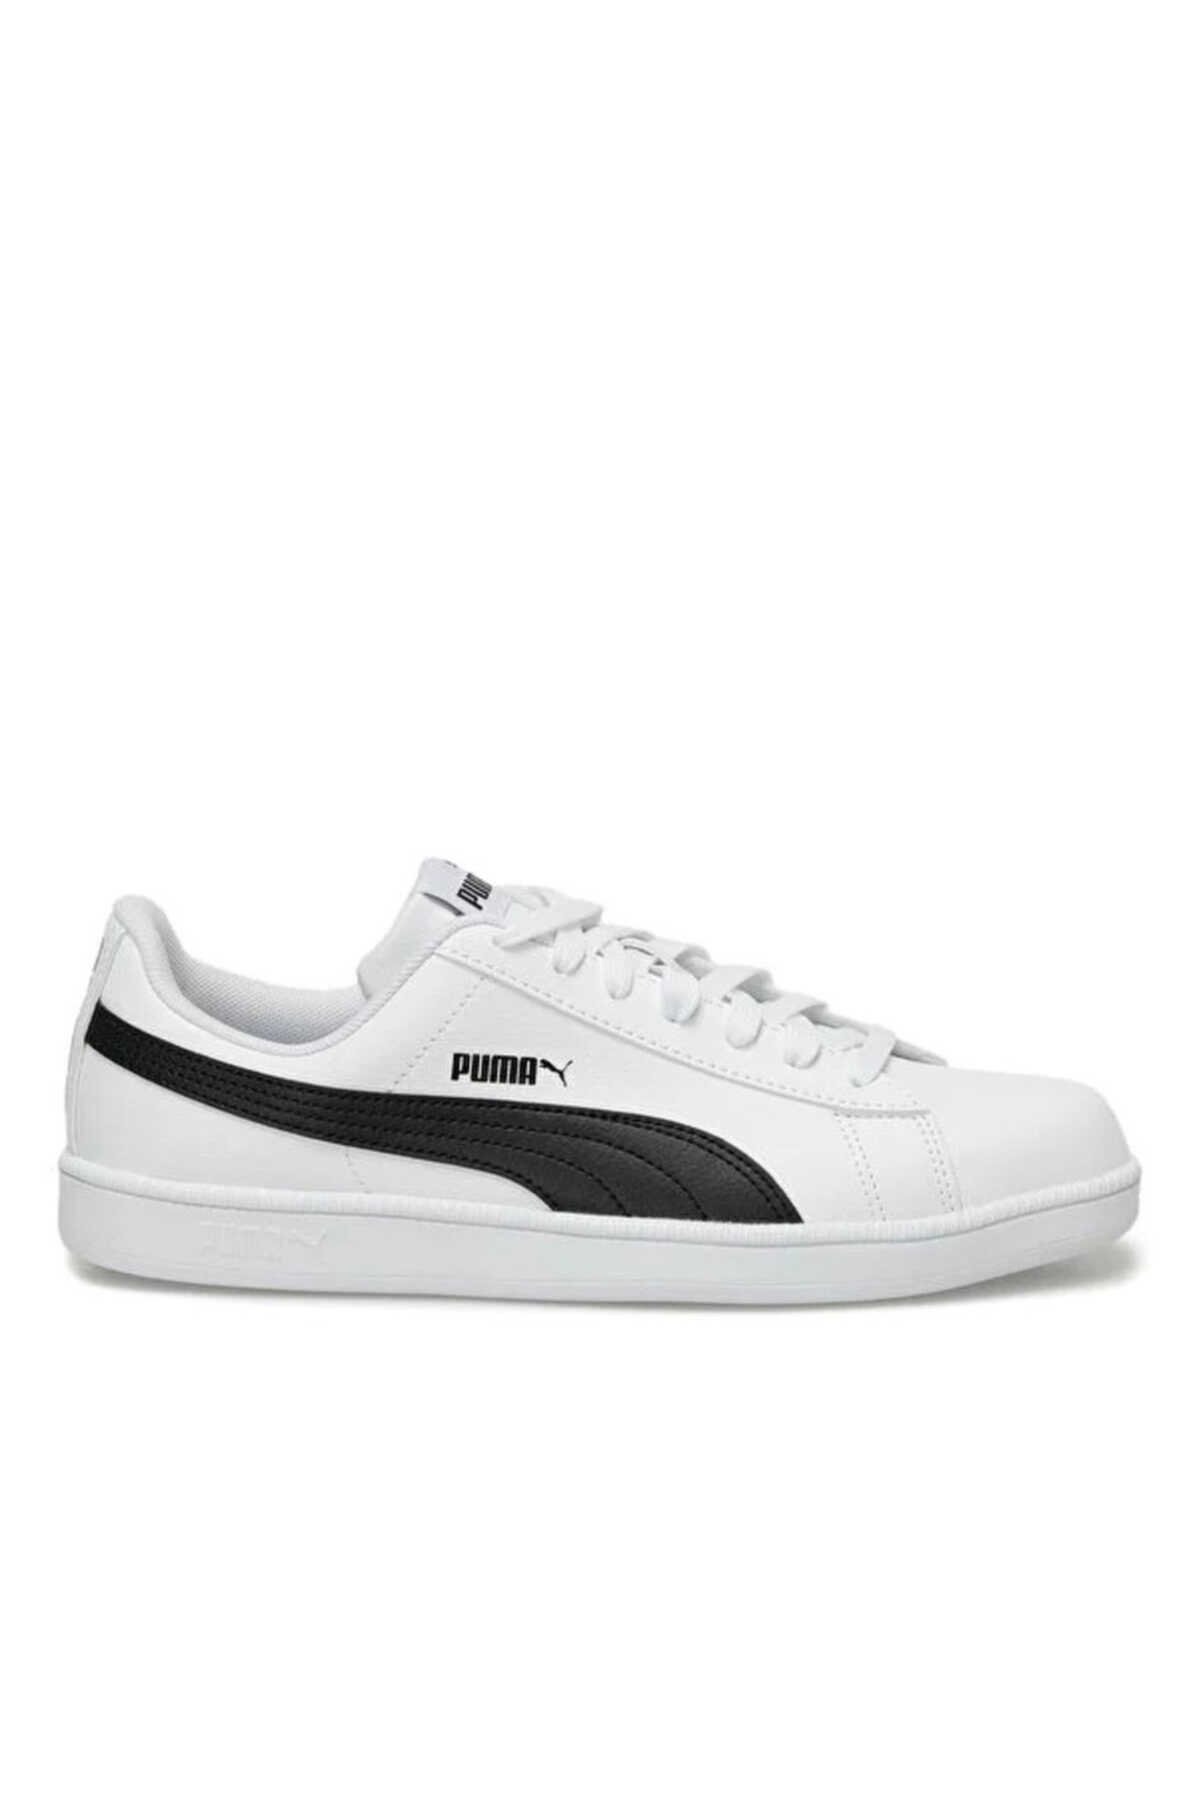 Puma - Puma Puma Up Unisex Sneaker Ayakkabı Beyaz / Siyah